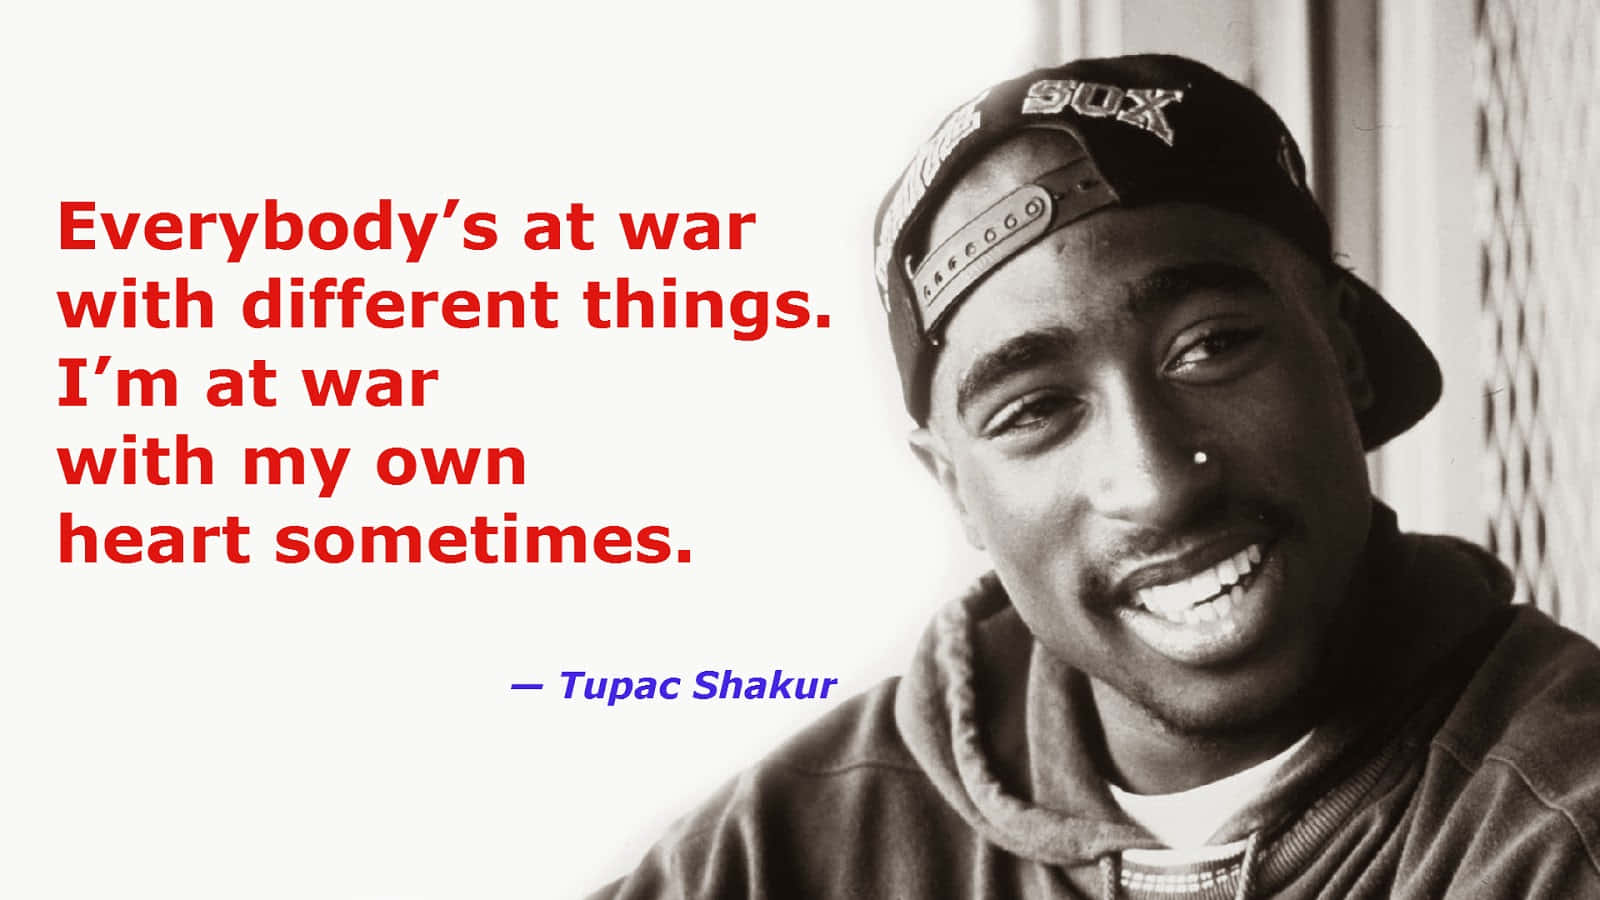 Tupac Shakur - Iconic Hip Hop Artist